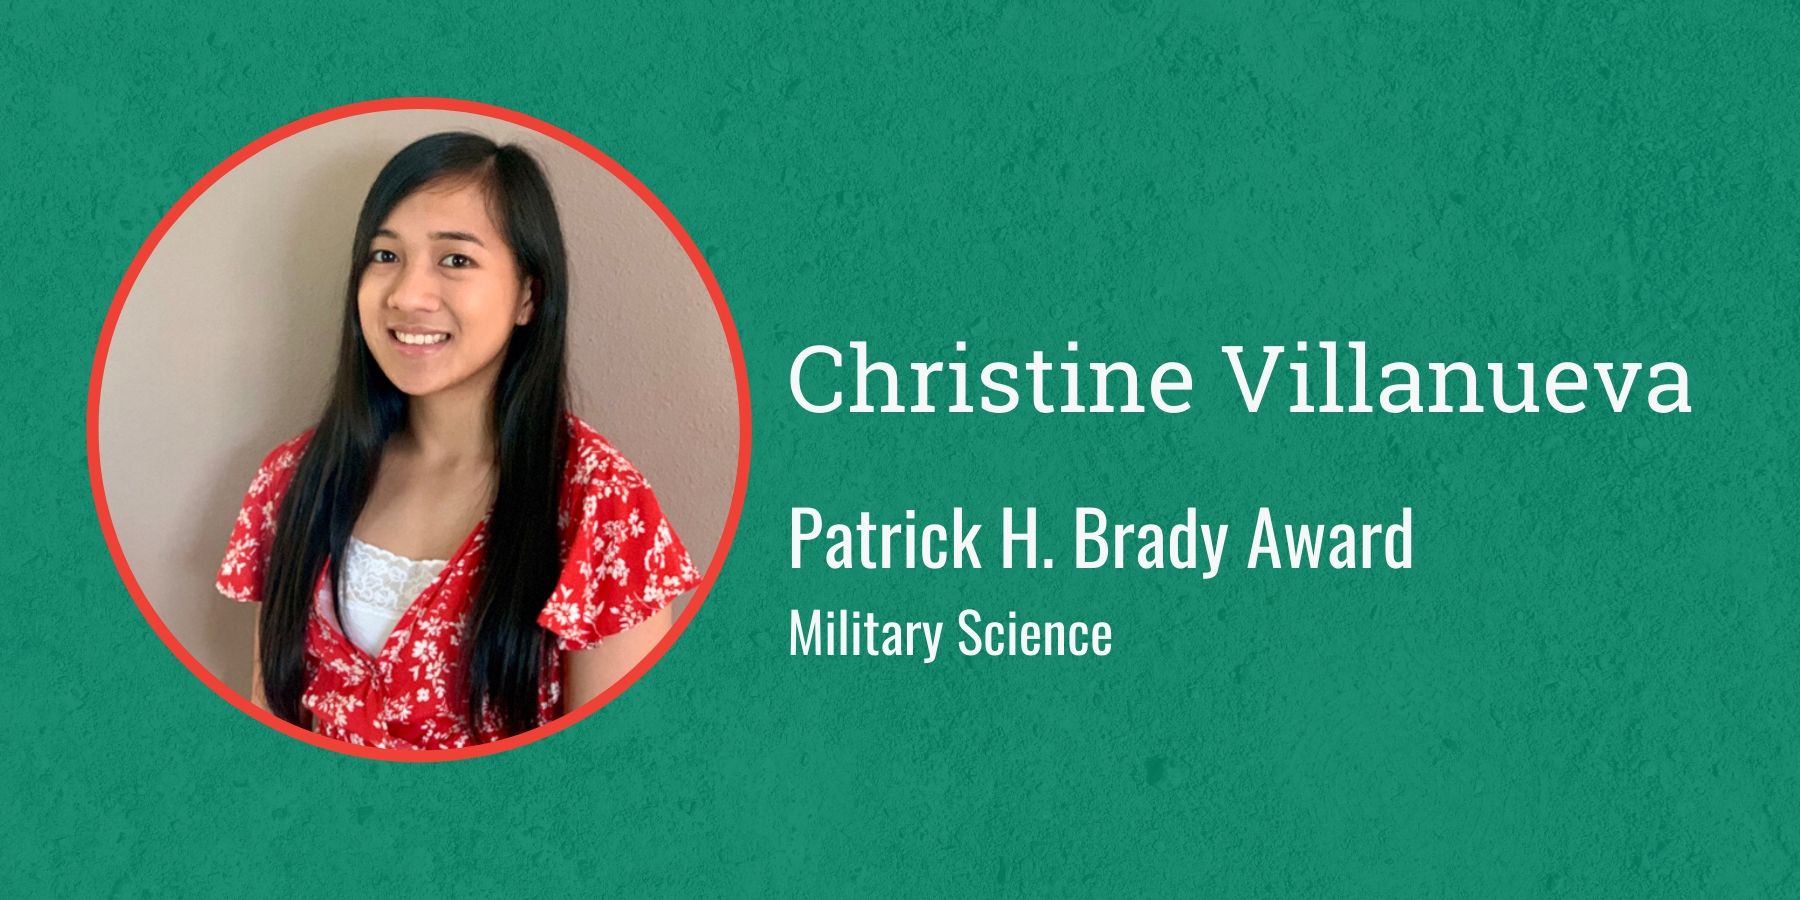 Photo of Christine Villanueva and text Patrick H. Brady Award, Military Science